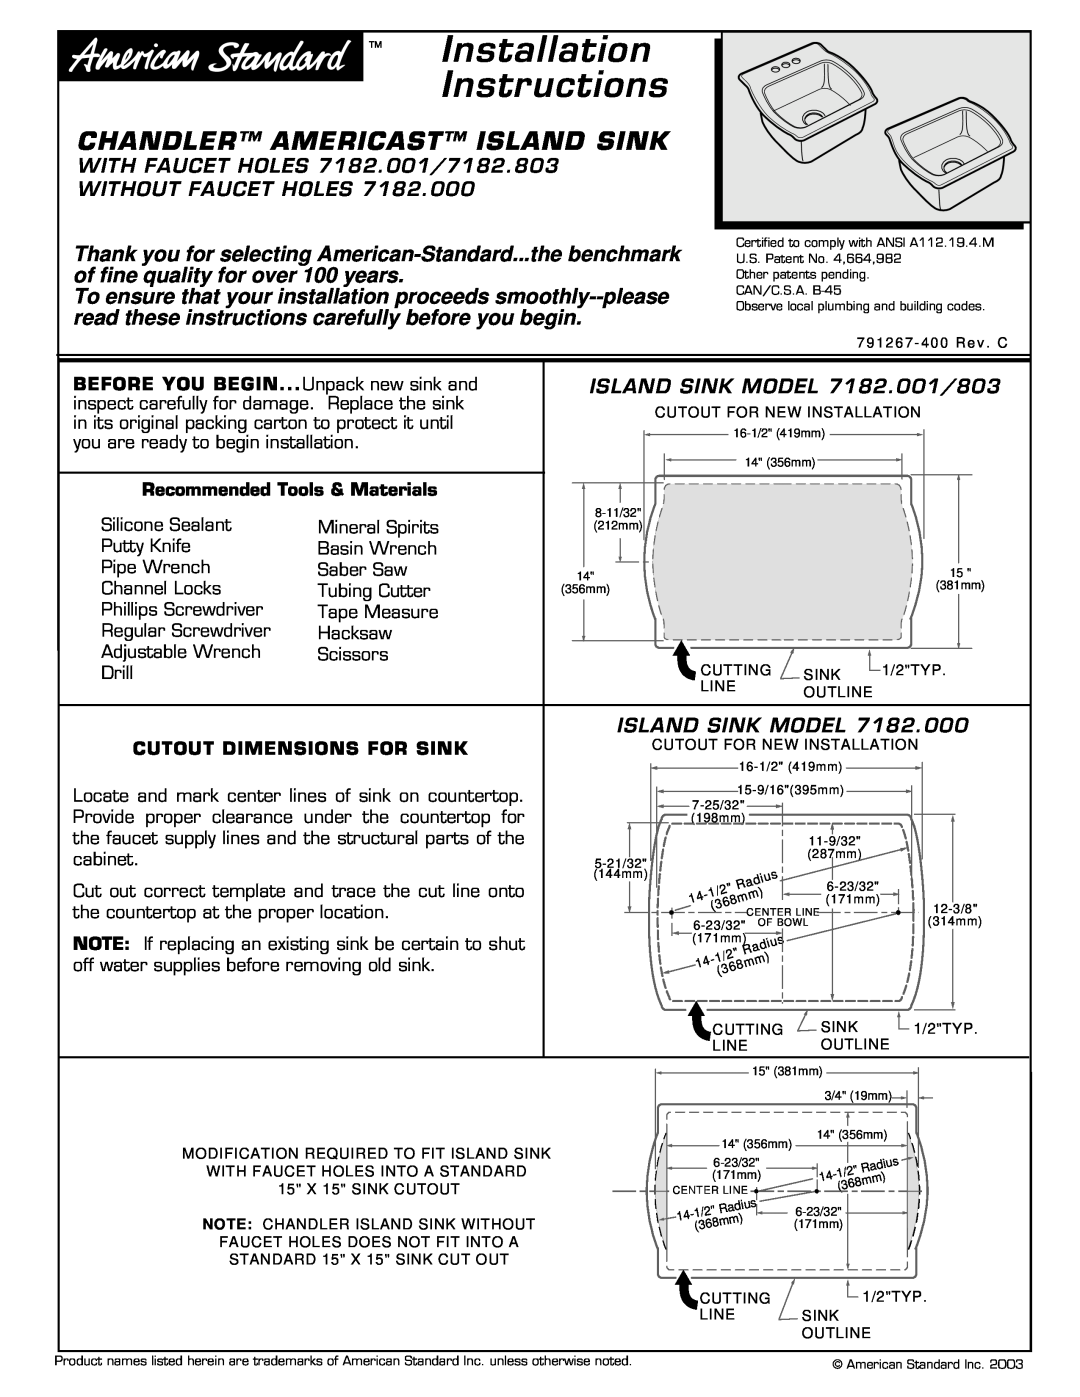 American Standard 7182.000, 7182.803 installation instructions Installation Instructions, Chandler Americast Island Sink 